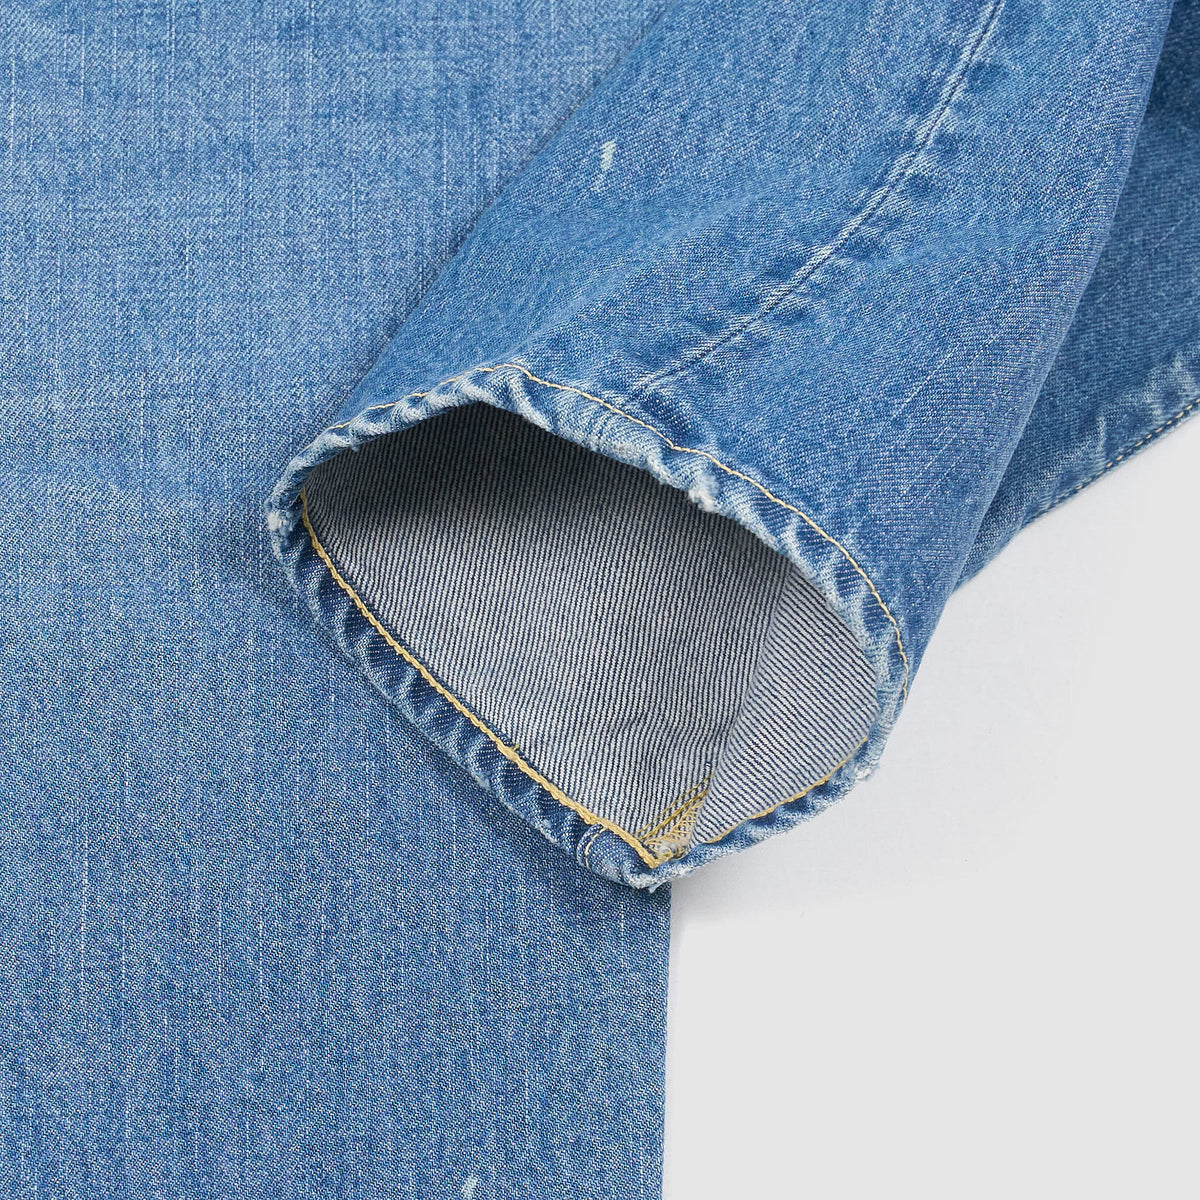 Kapital 5-Pocket 14oz Monkey Cisco Frontstitch Repaired Denim Jeans (3 Year Processing)